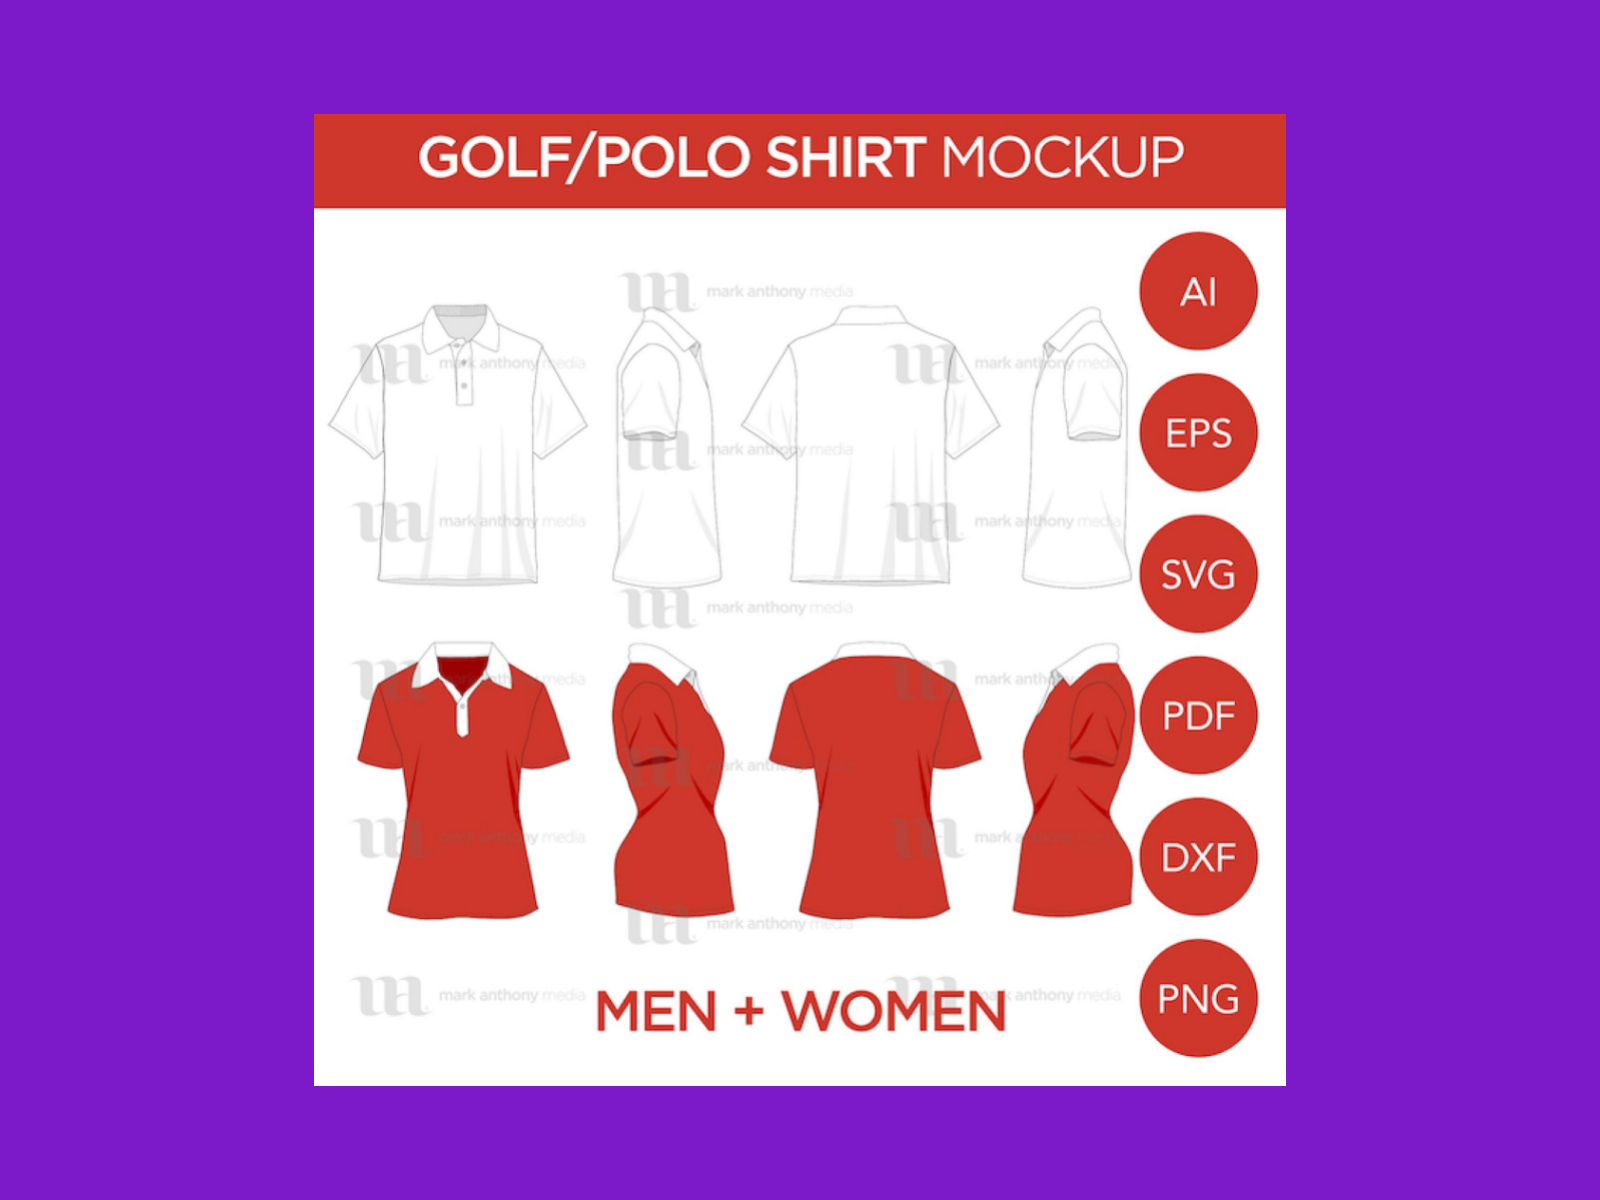 Polo Shirt Mockup Template by MasterBundles on Dribbble